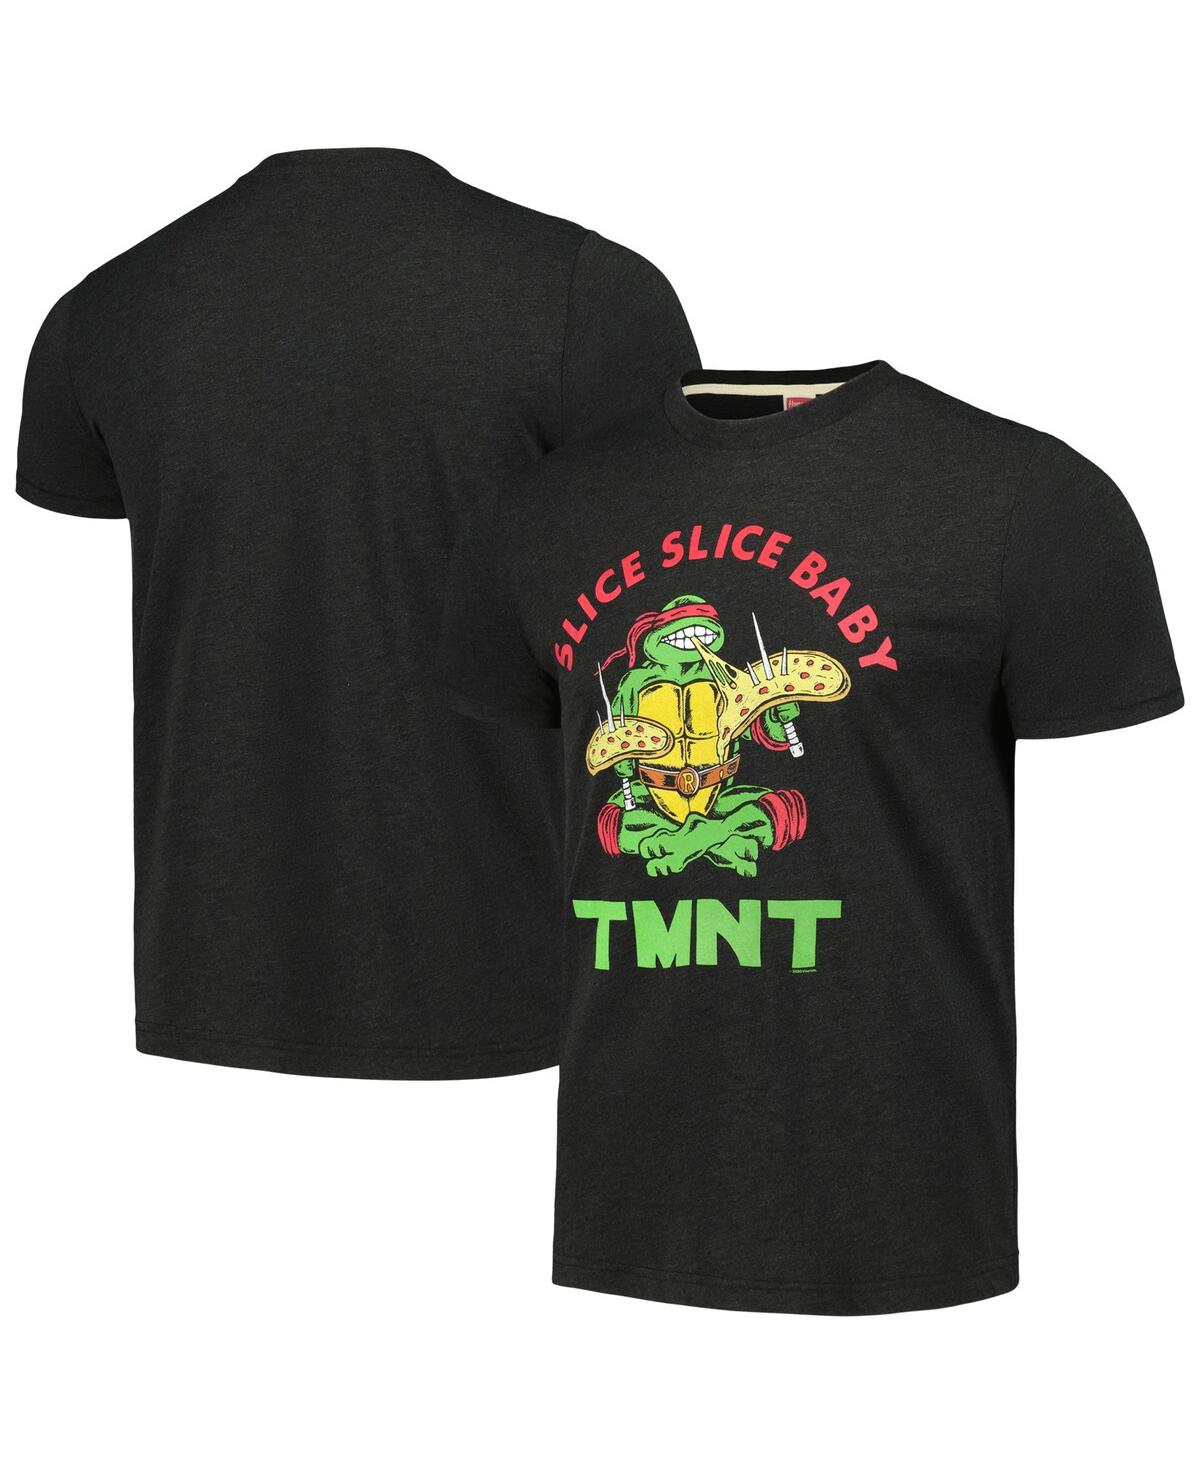 Men's and Women's Homage Charcoal Teenage Mutant Ninja Turtles Tri-Blend T-shirt - Charcoal